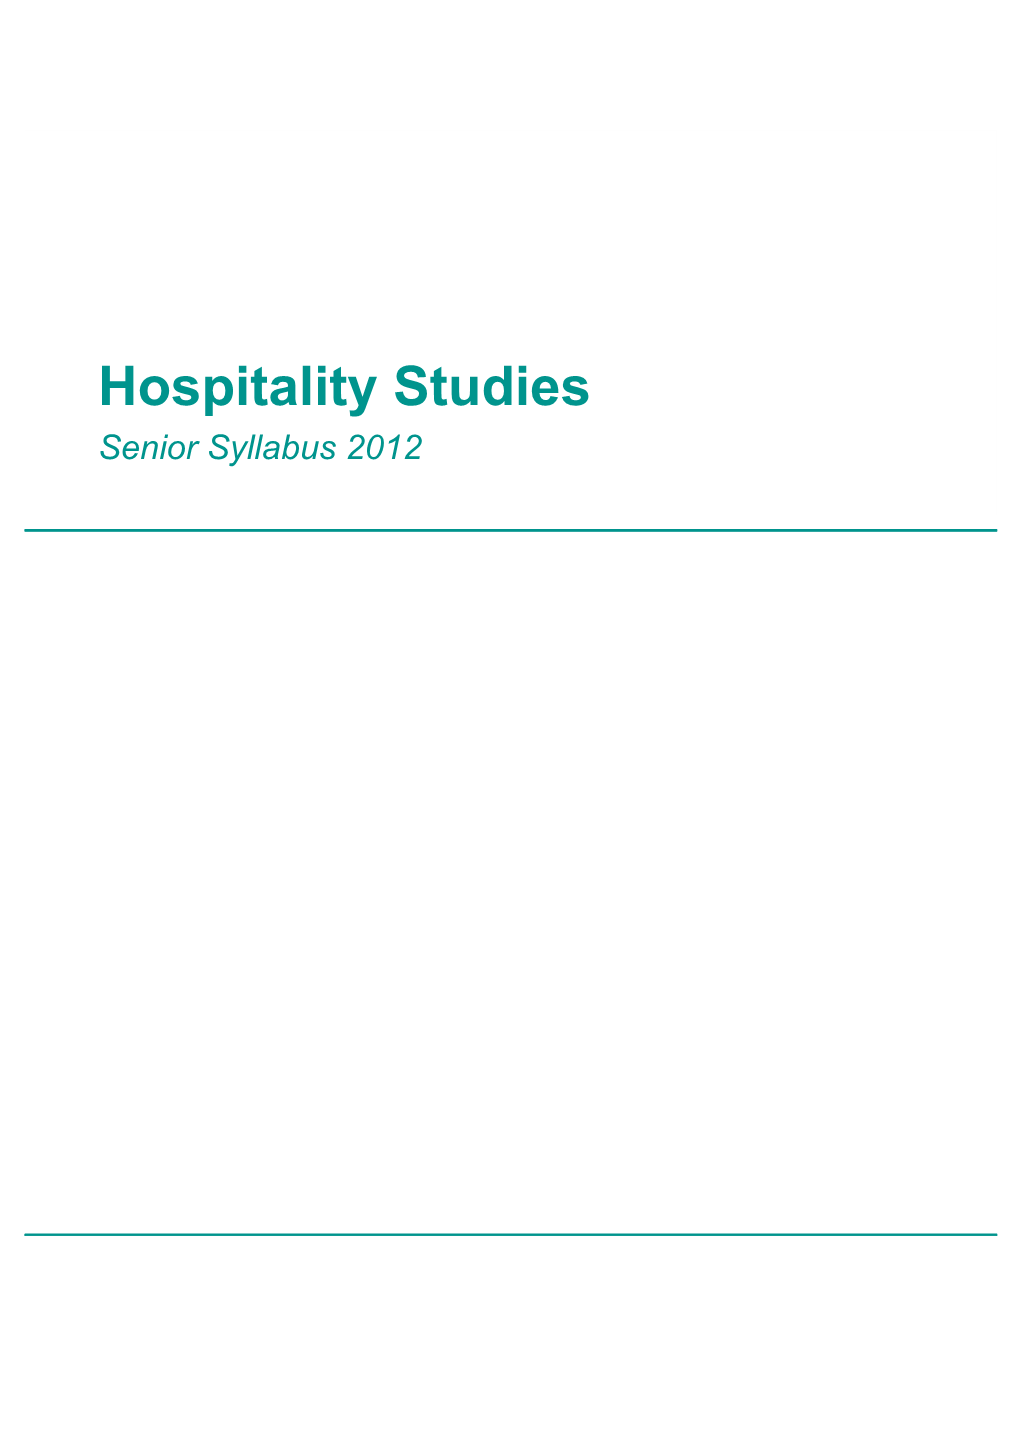 Hospitality Studies Senior Syllabus 2012